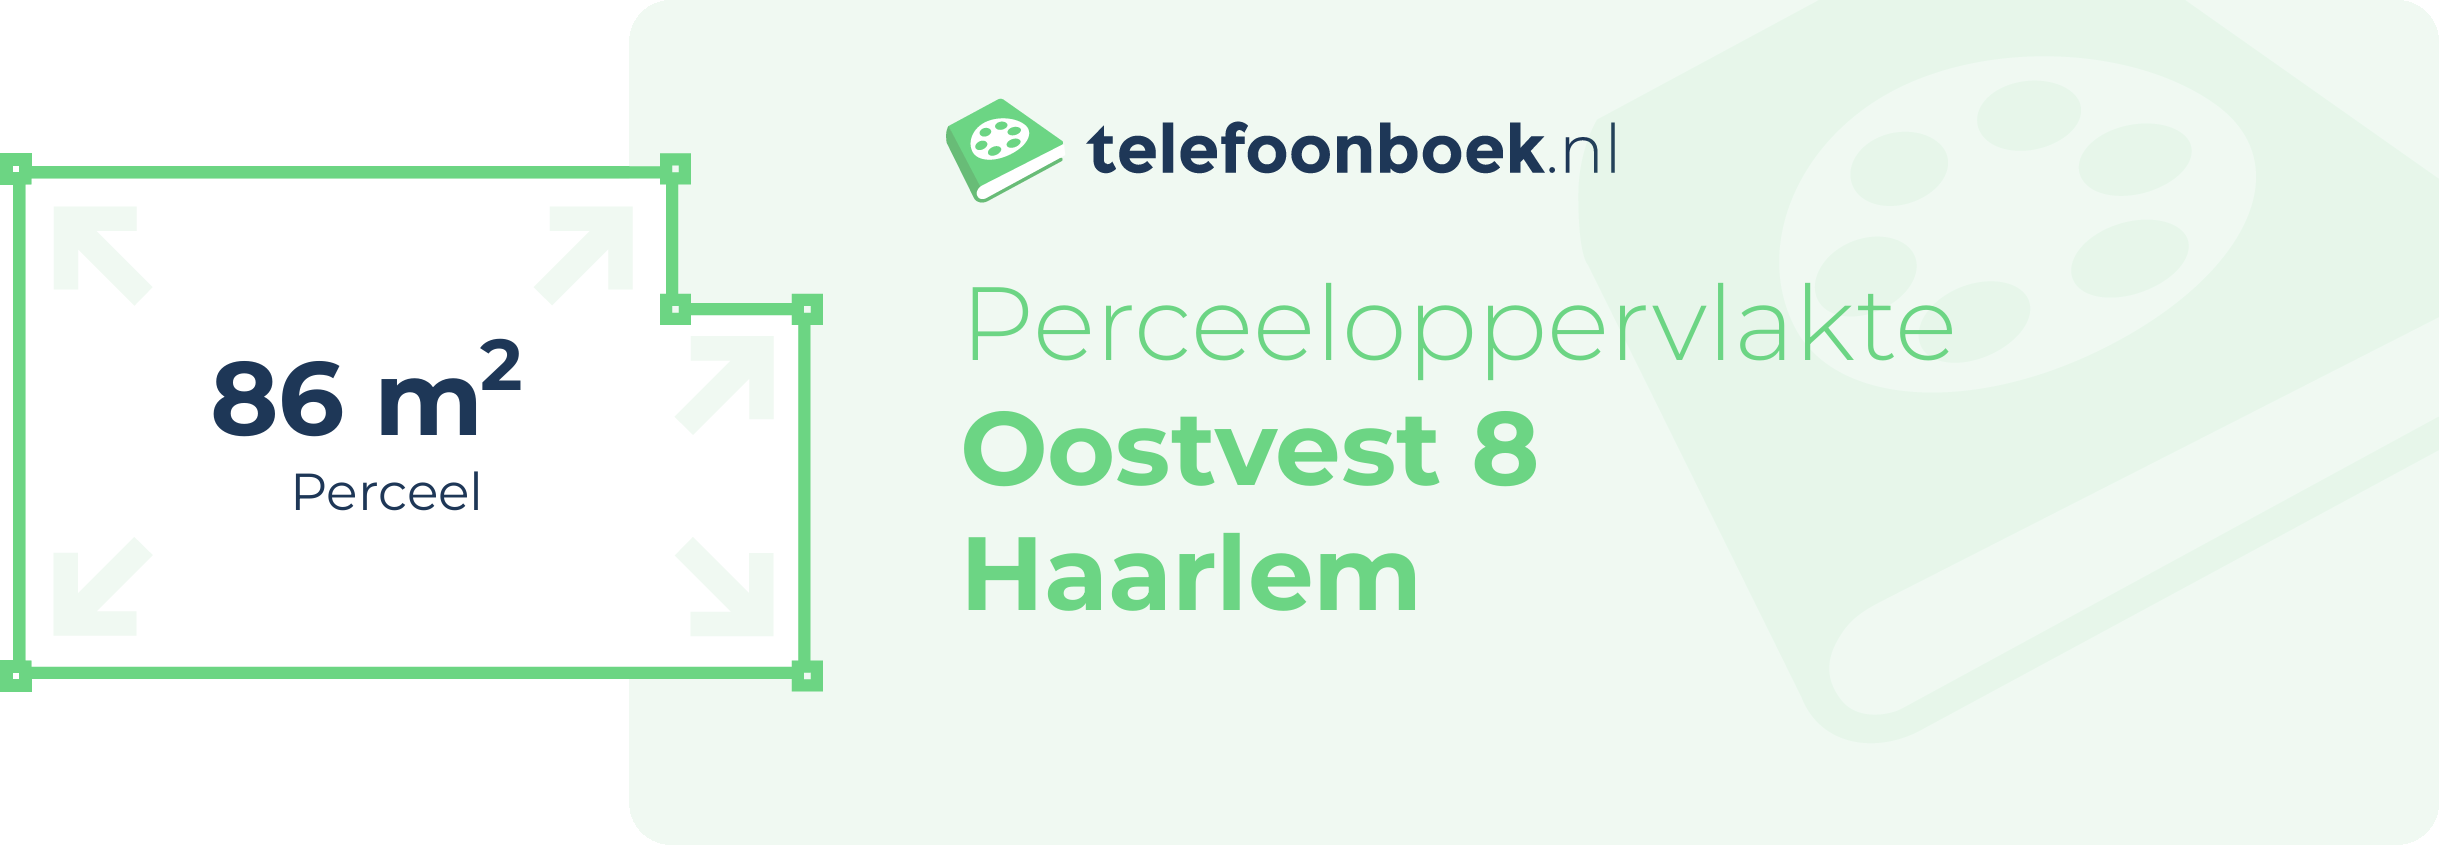 Perceeloppervlakte Oostvest 8 Haarlem